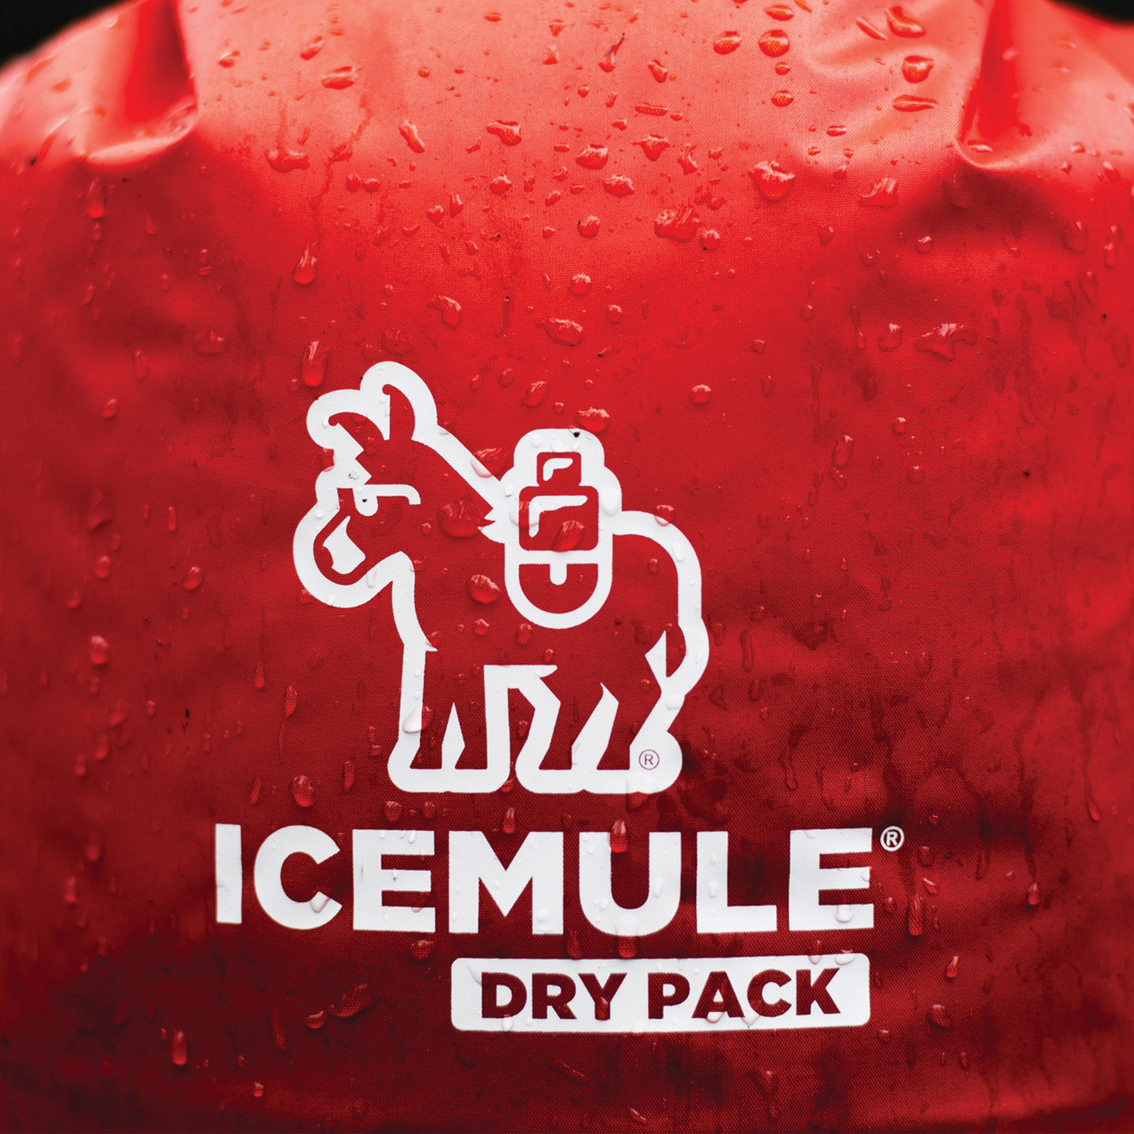 IceMule Dry Pack - Image 5 of 5